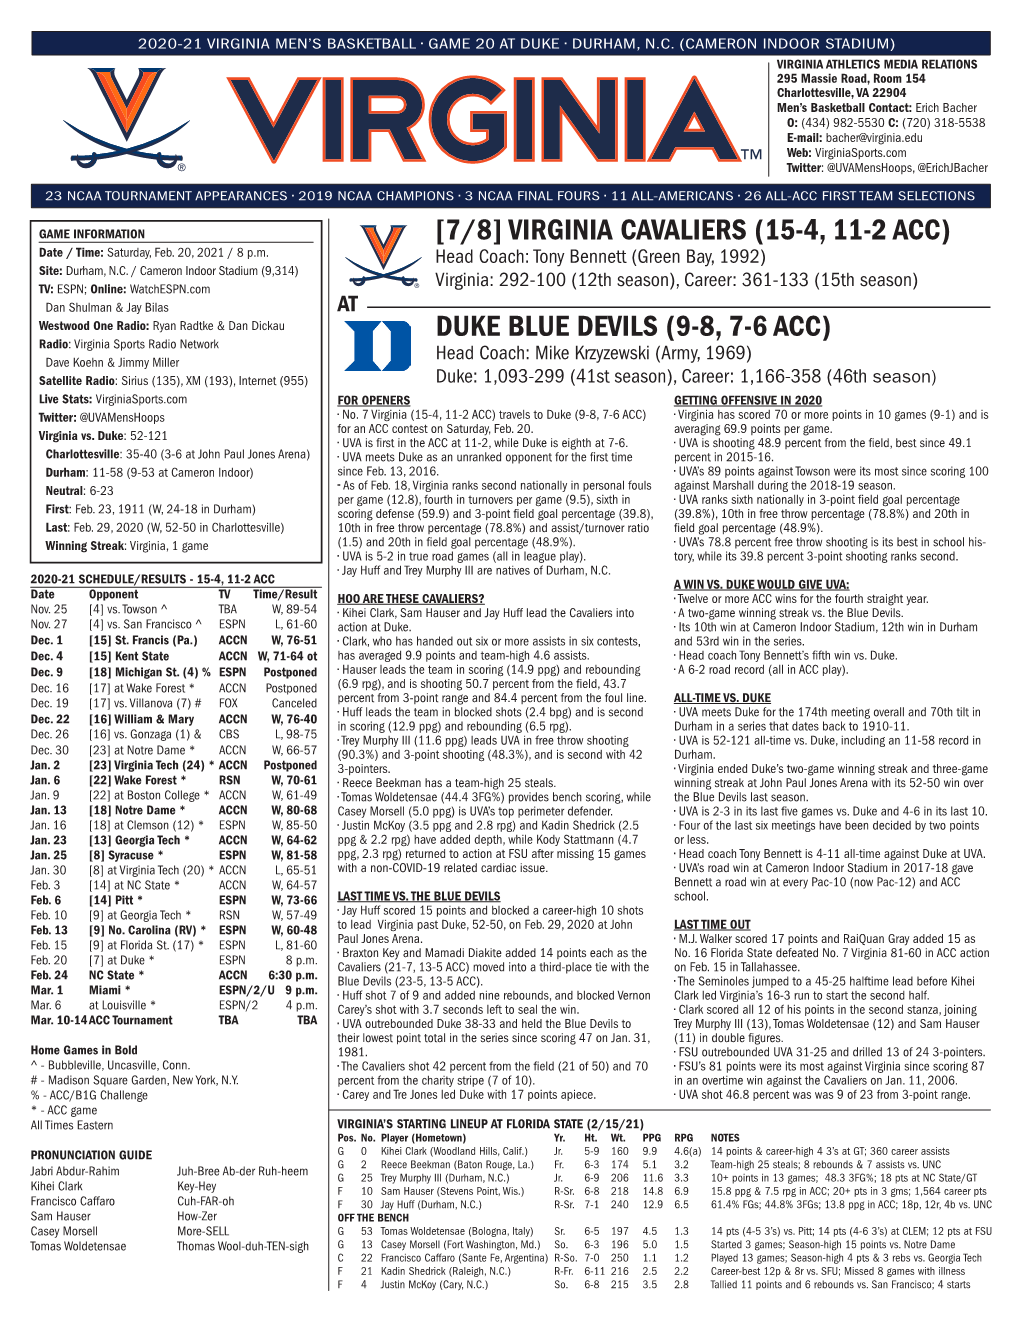 Virginia Cavaliers (15-4, 11-2 Acc) Duke Blue Devils